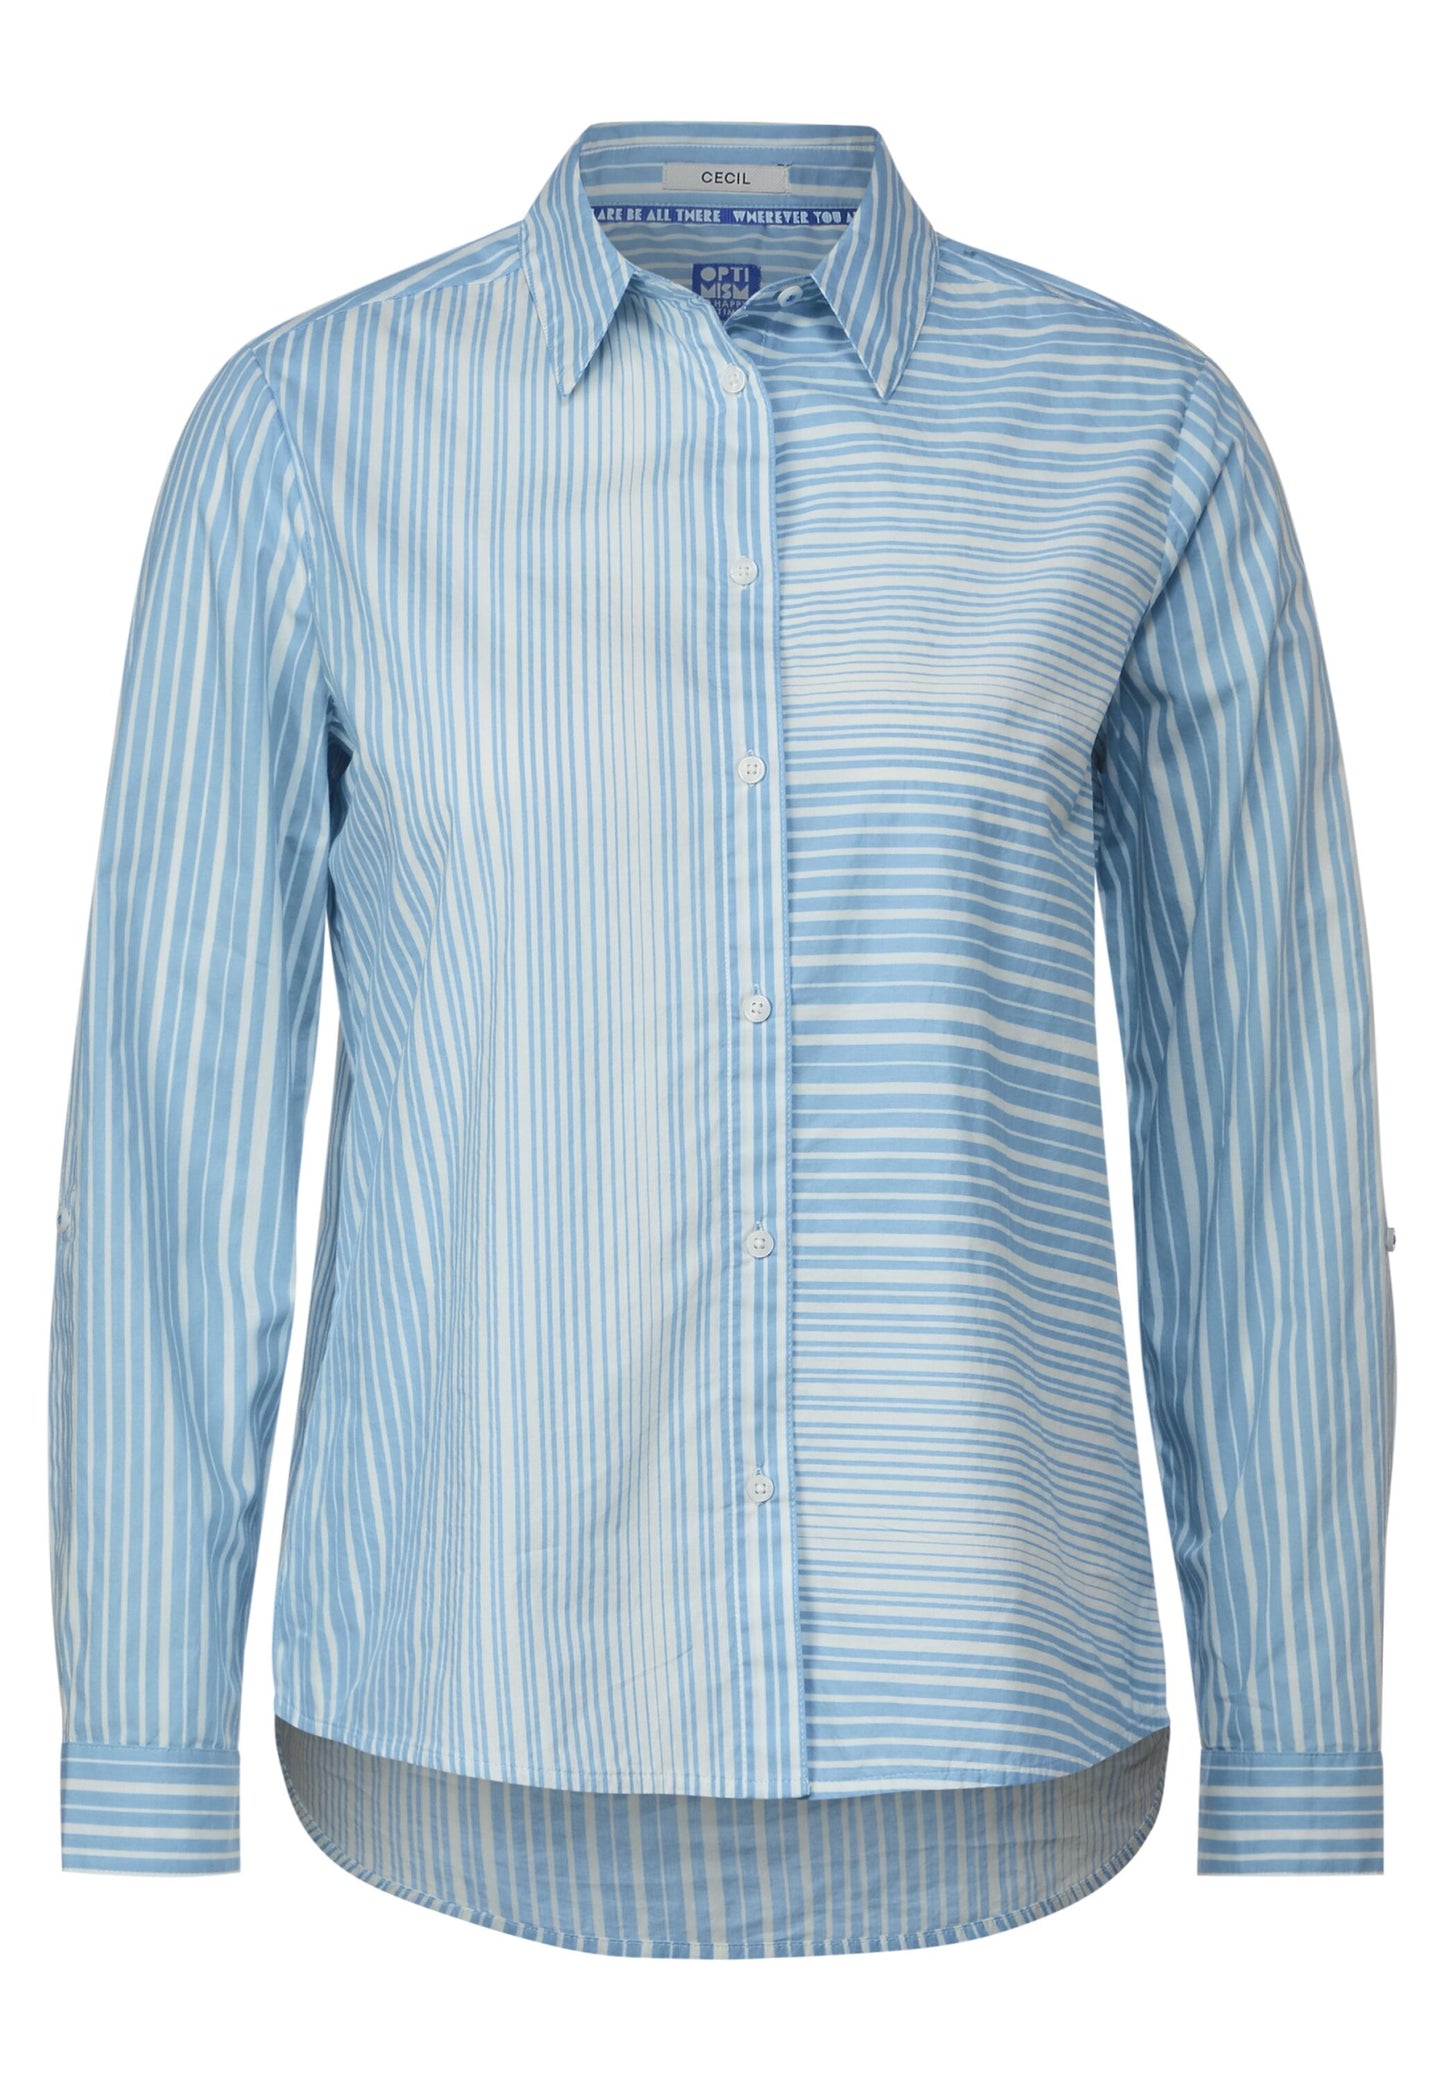 Striped mix shirt blouse